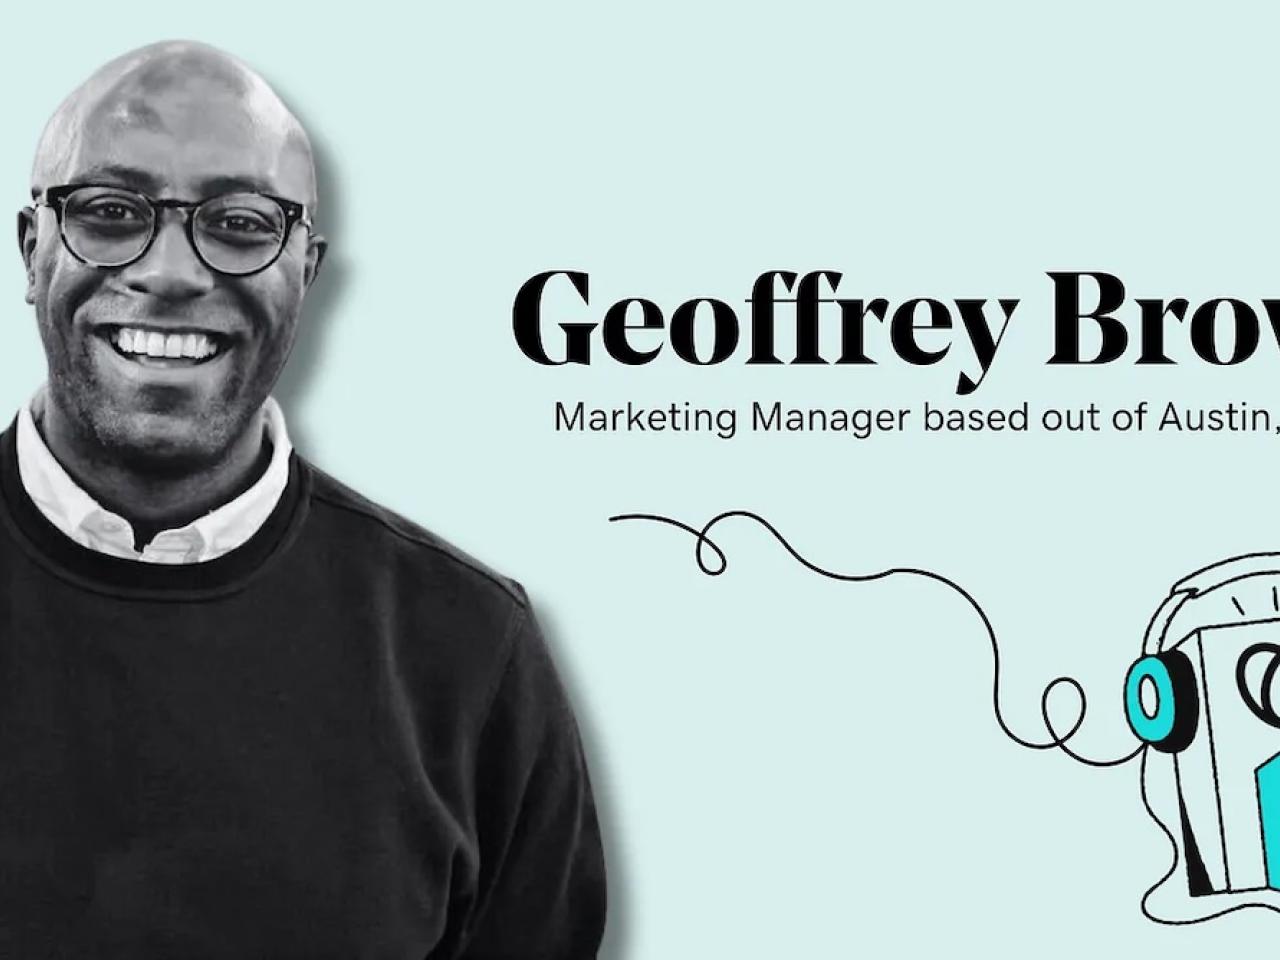 Geoffrey Brown photo; Marketing Manager at GoDaddy.